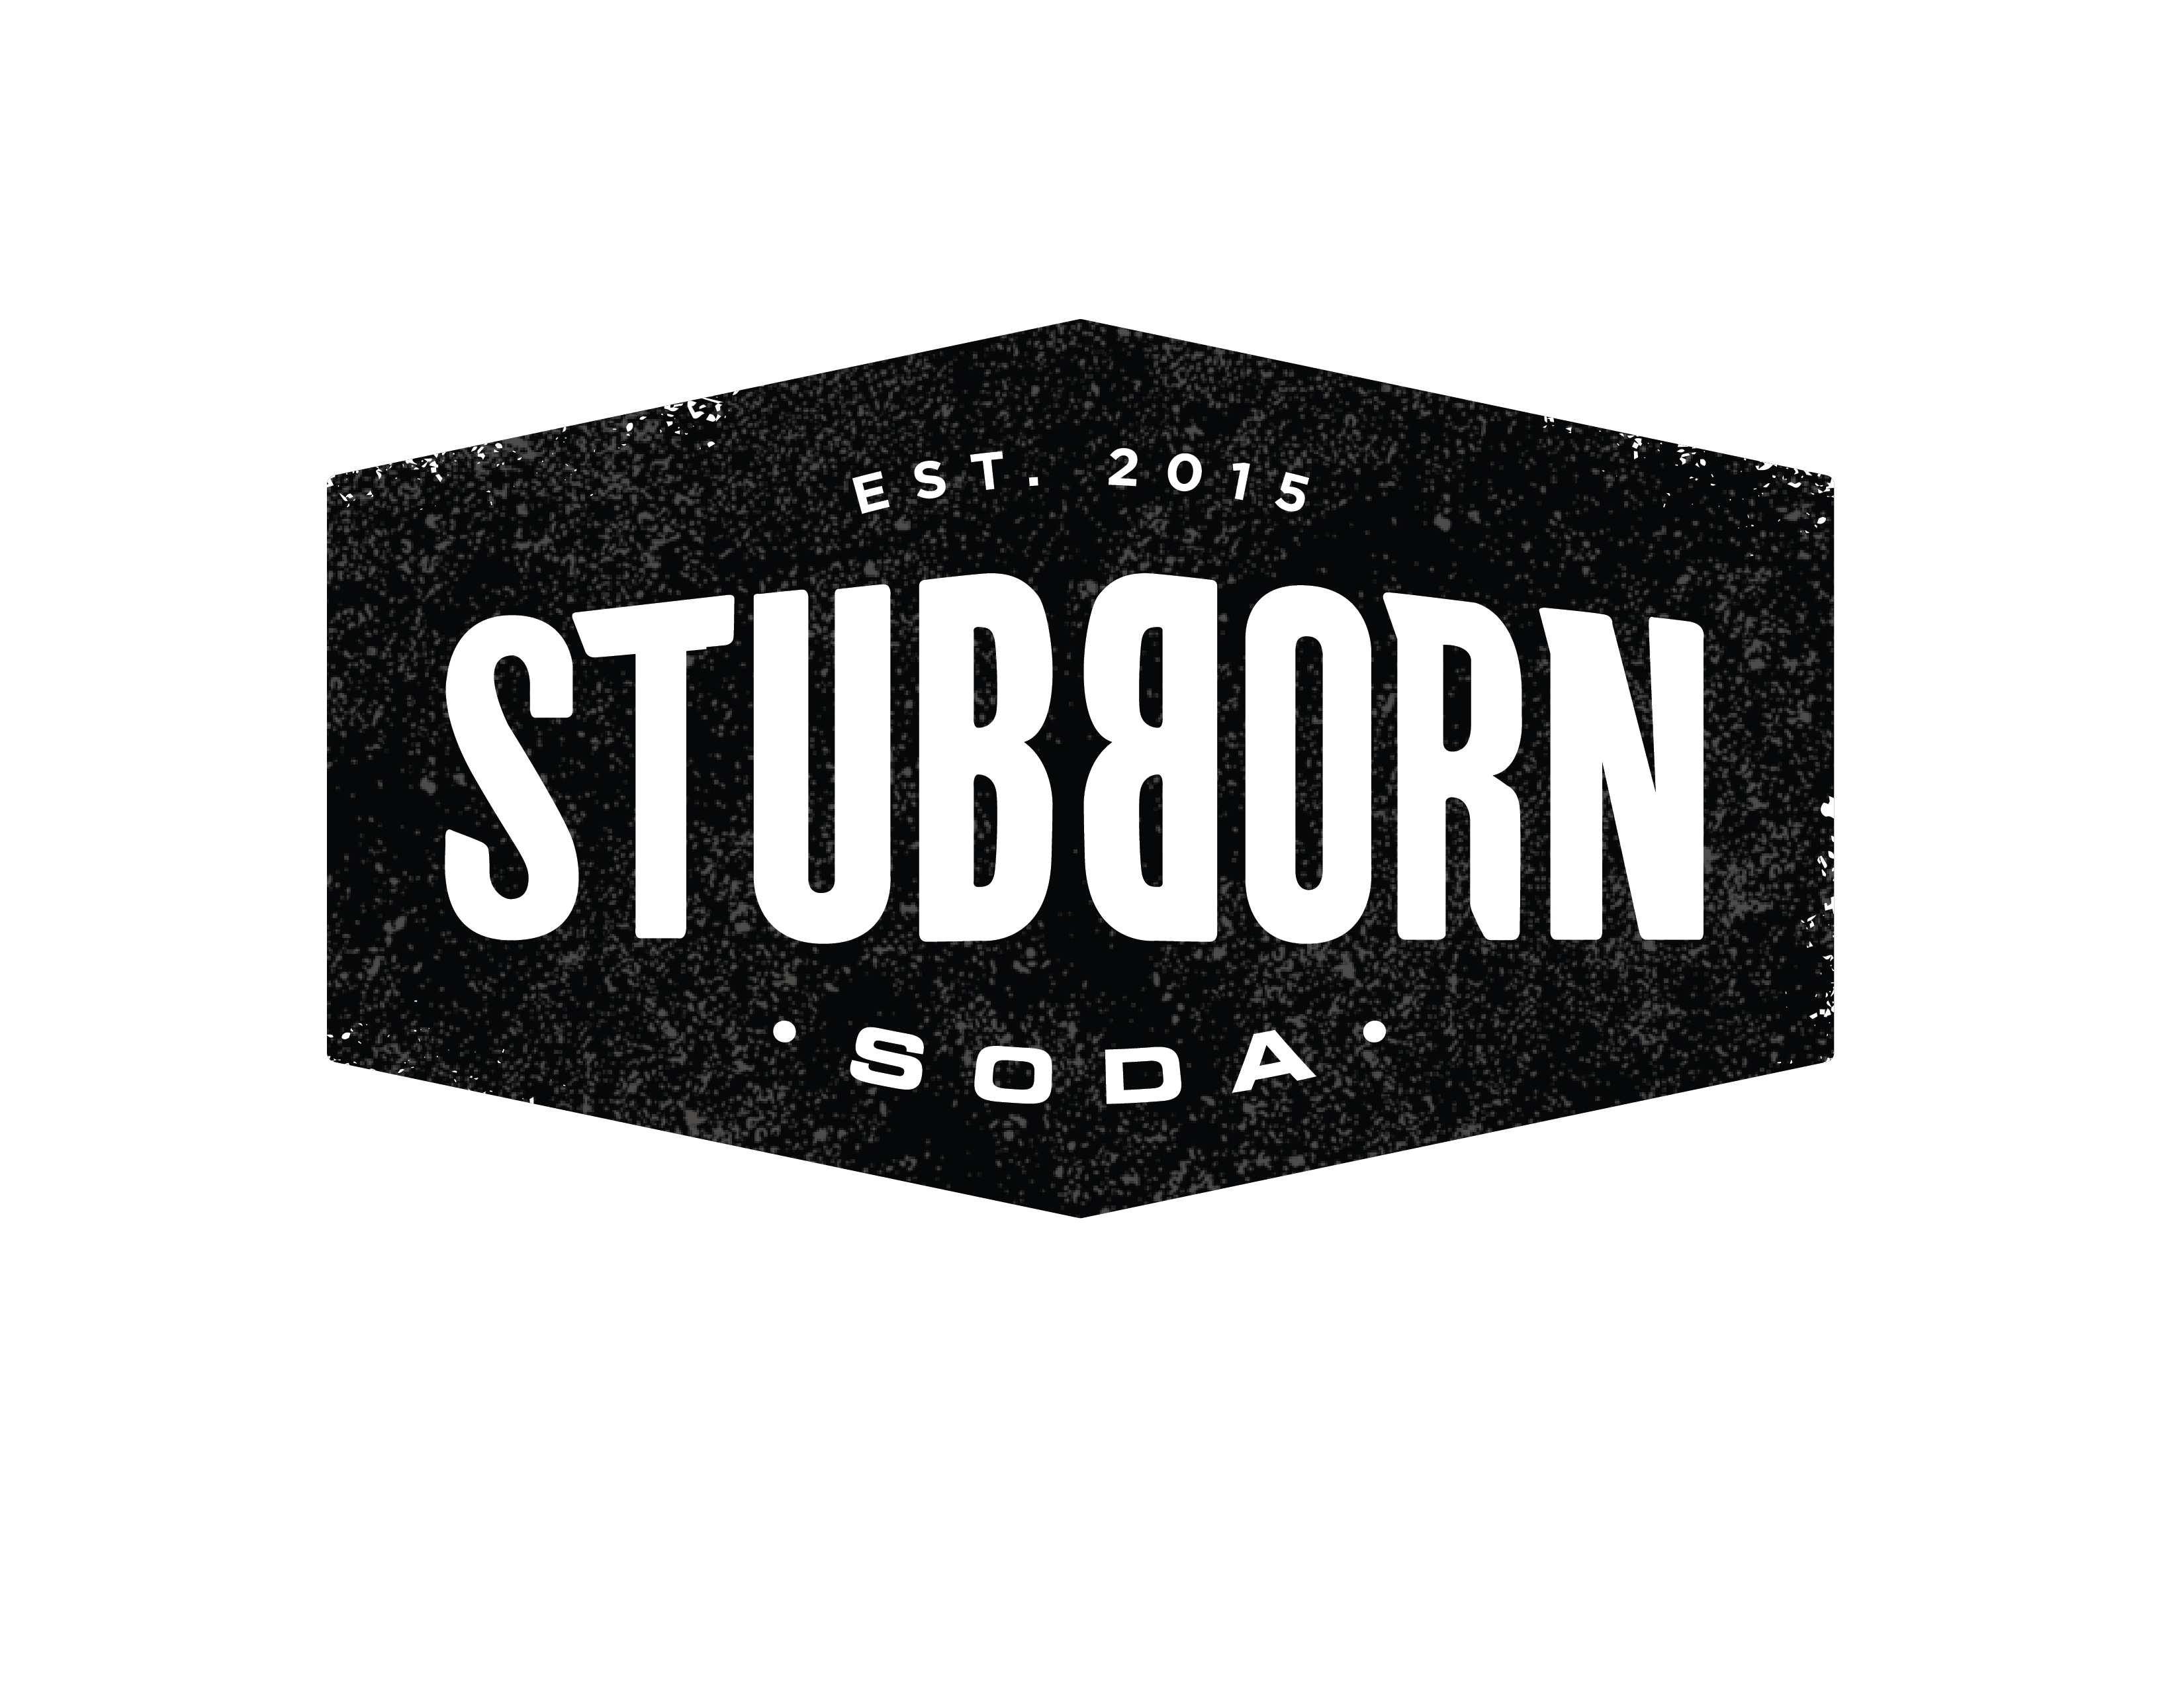 Popular Soda Brand Logo - Pepsi to launch new craft soda called Stubborn Soda